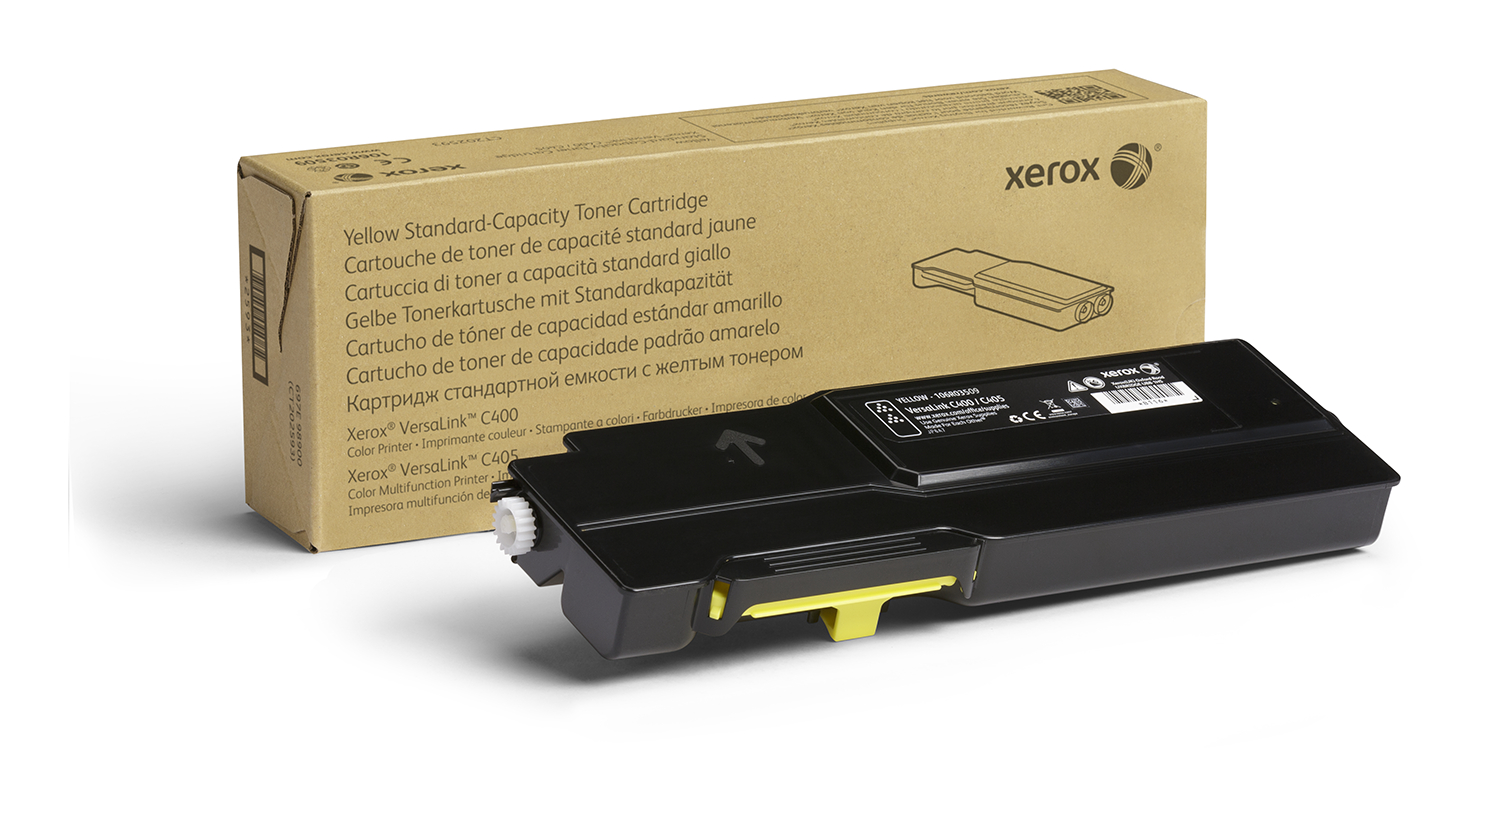 Yellow Standard Capacity Toner Cartridge